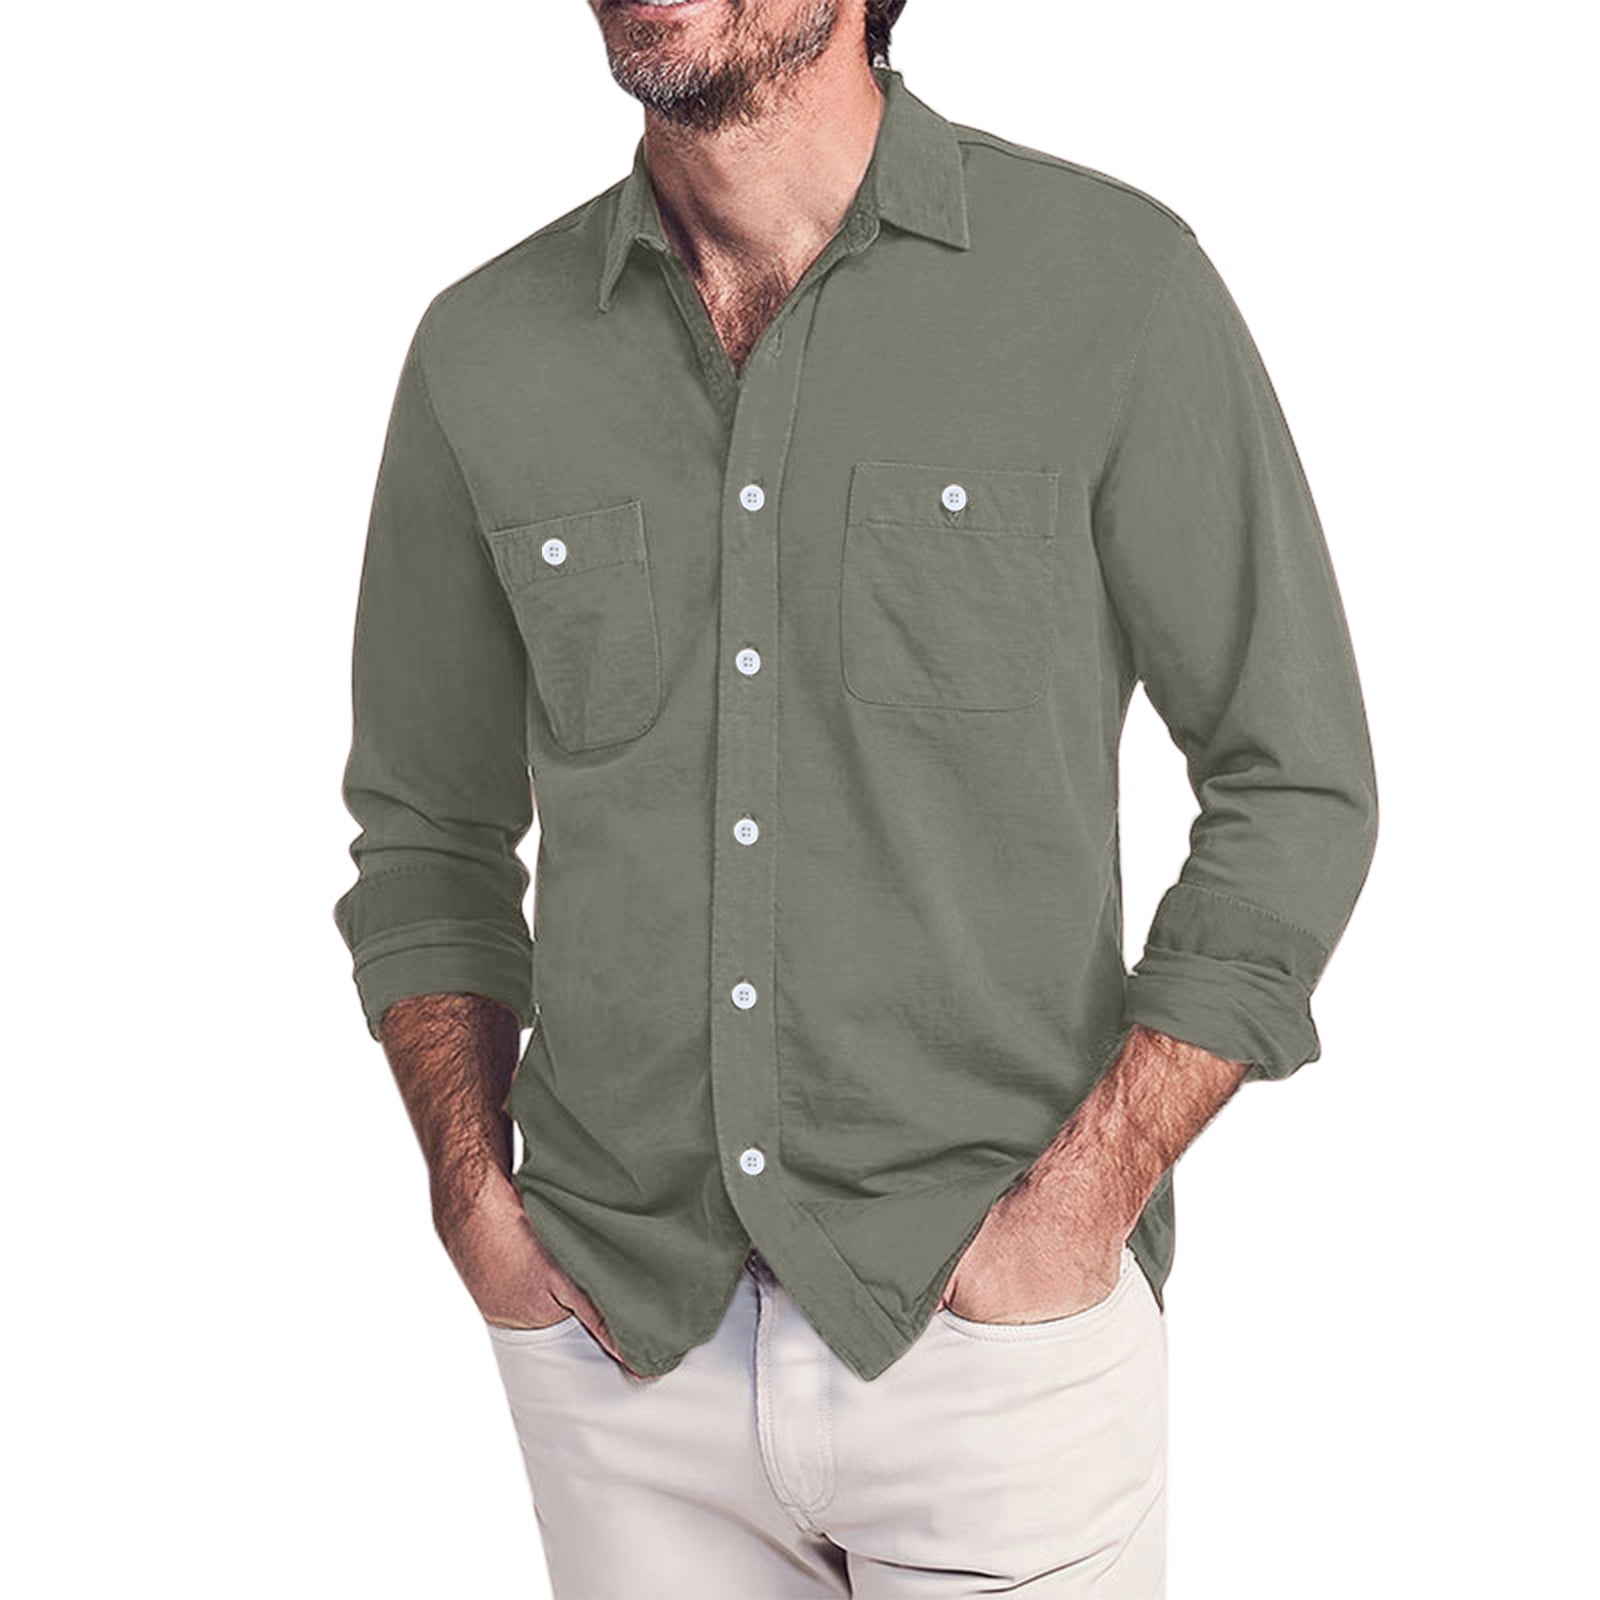 adviicd Long Sleeve Polo Shirts For Men Men's Fashion Summer